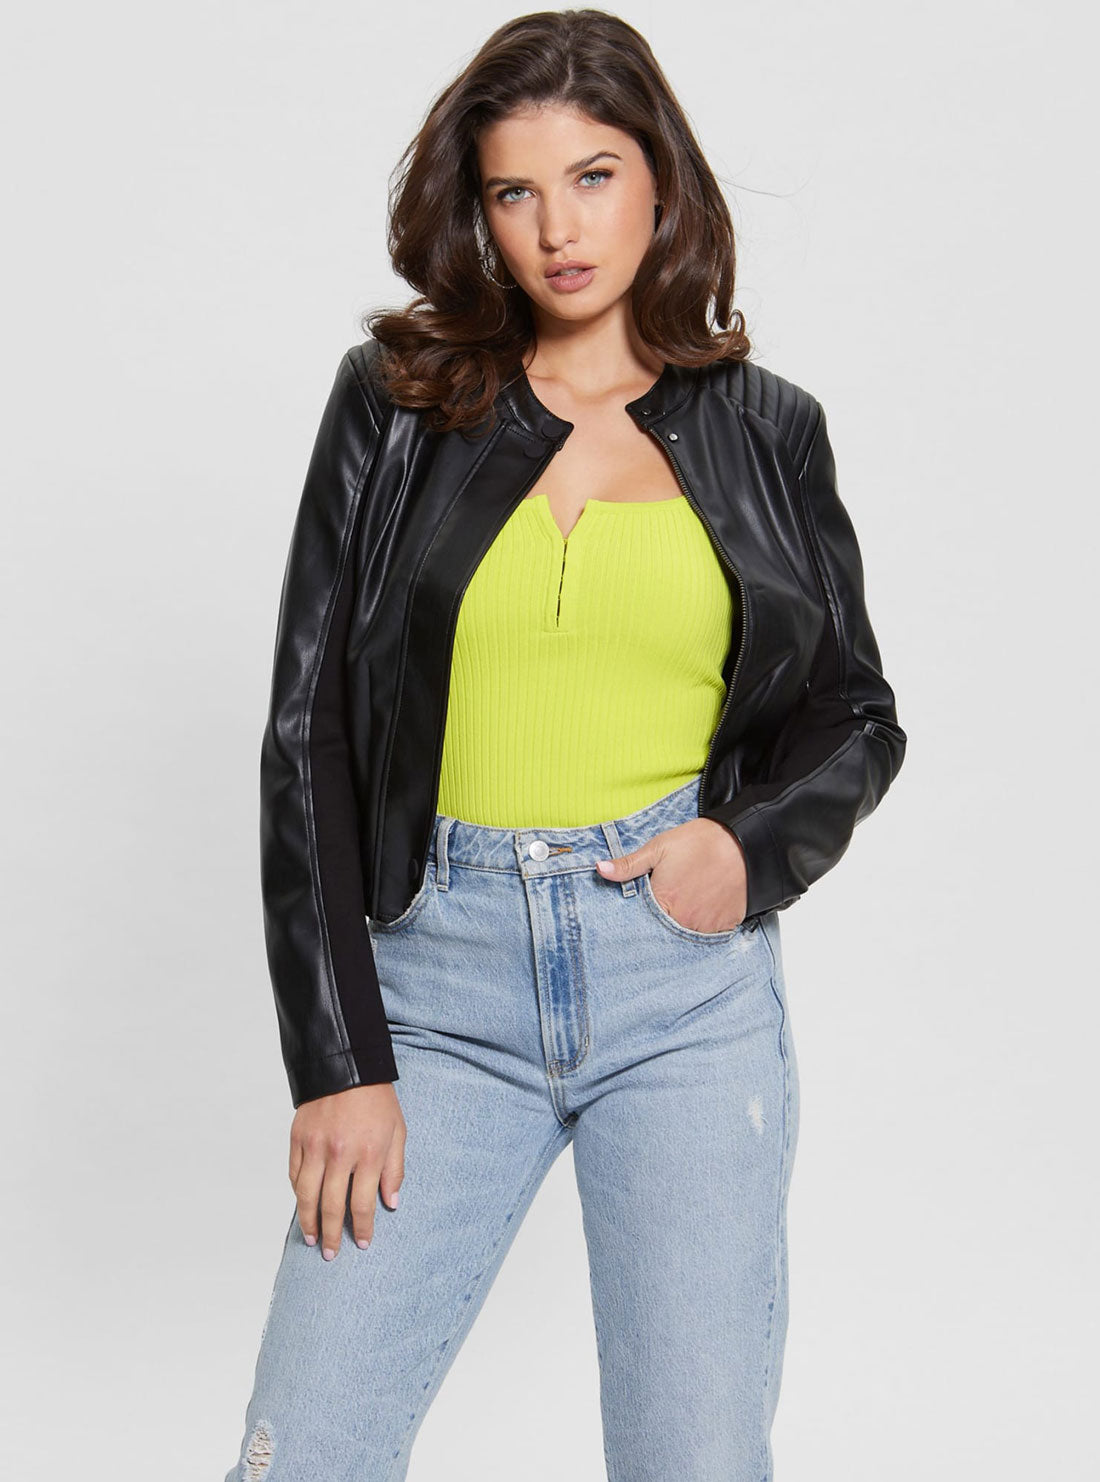 Black Fiammetta Leather Jacket | GUESS Women's Jackets | front view